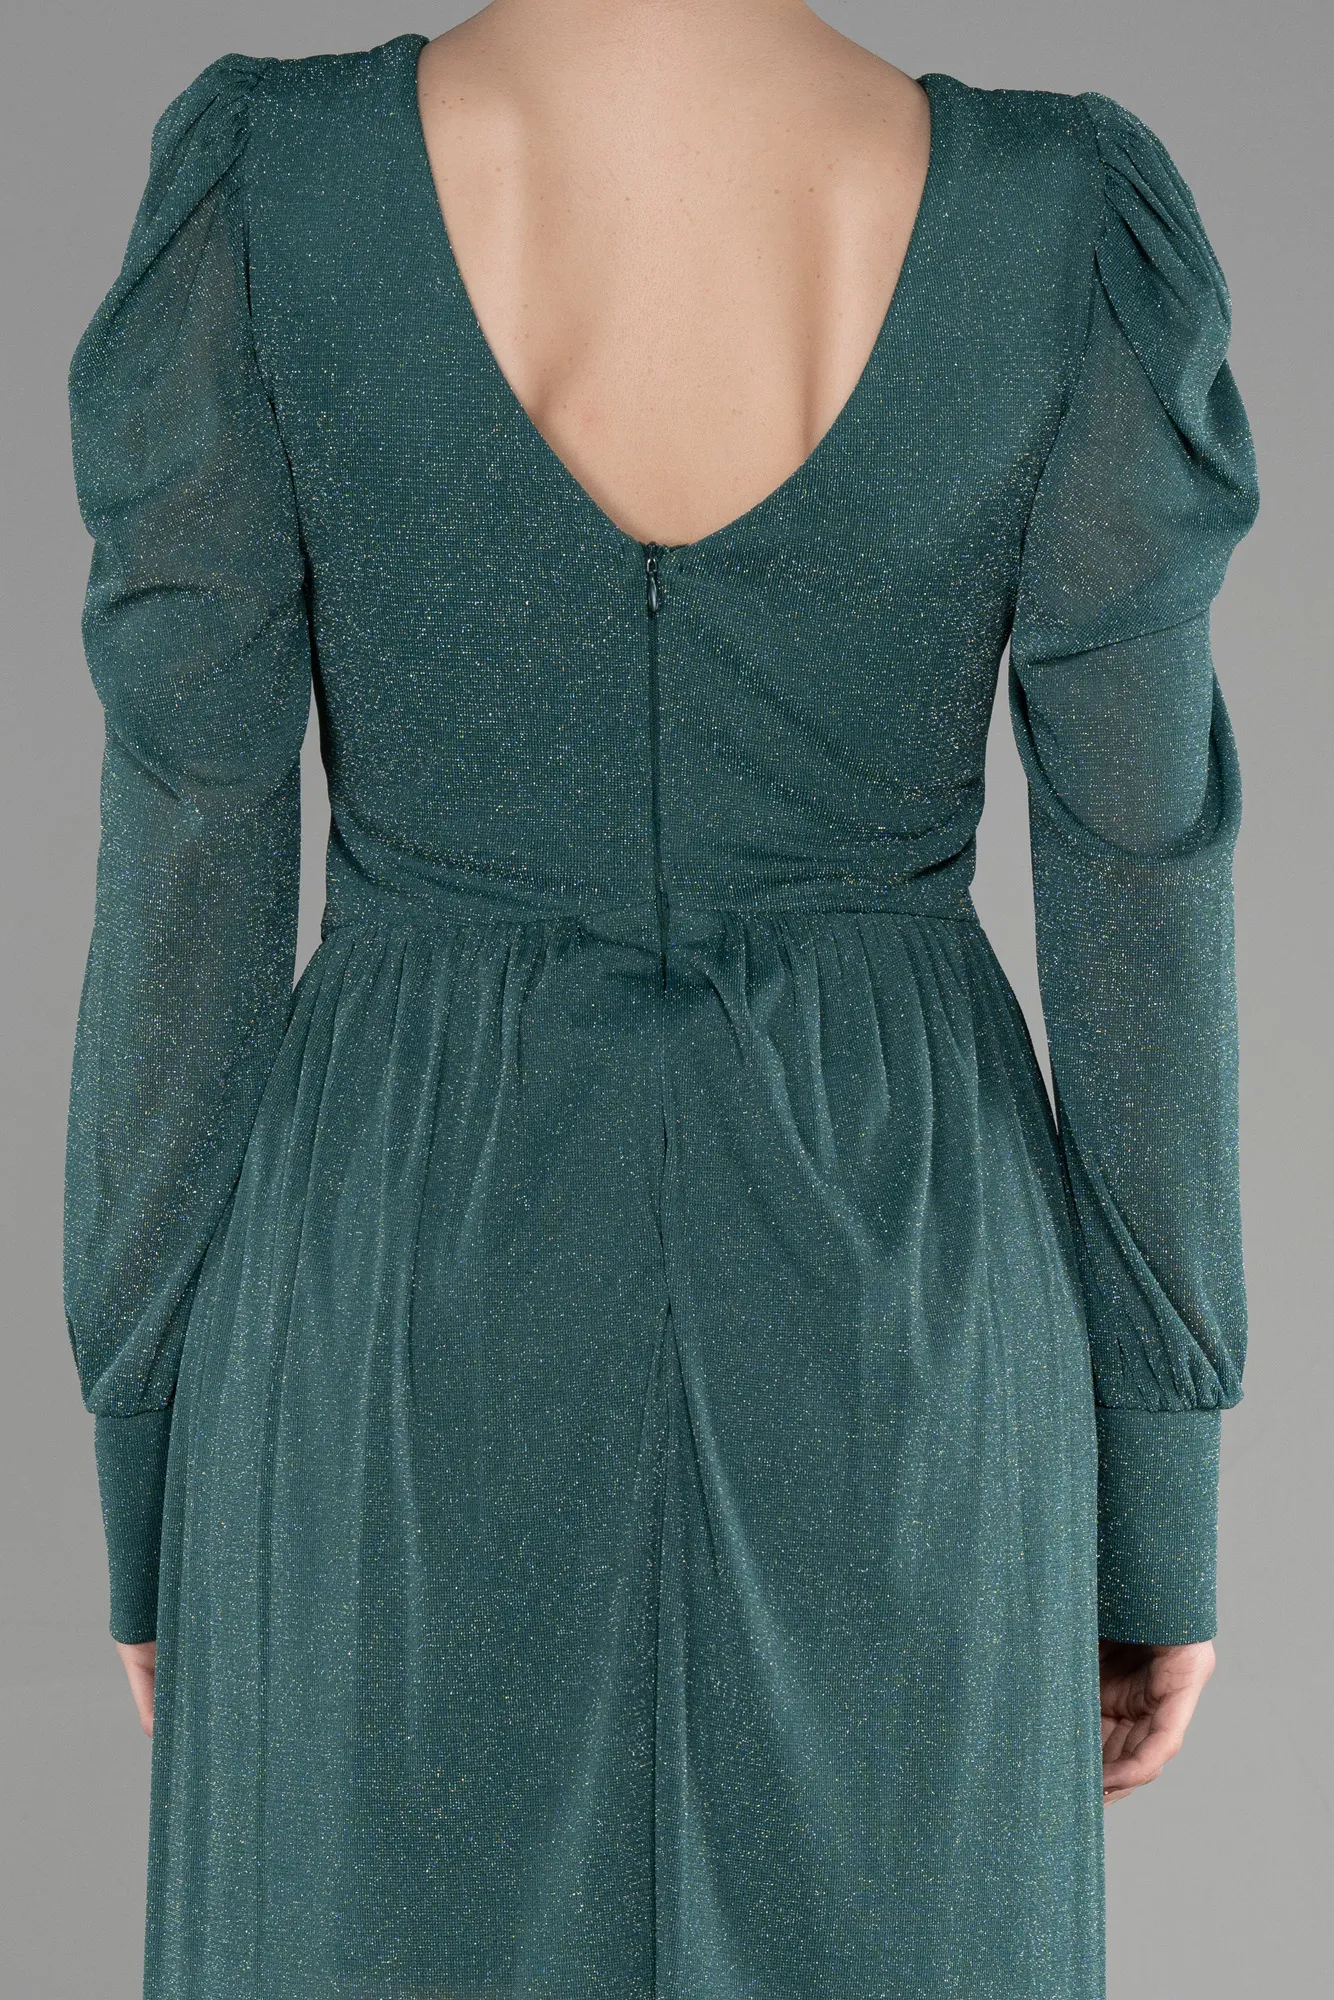 Emerald Green-Short Invitation Dress ABK1839